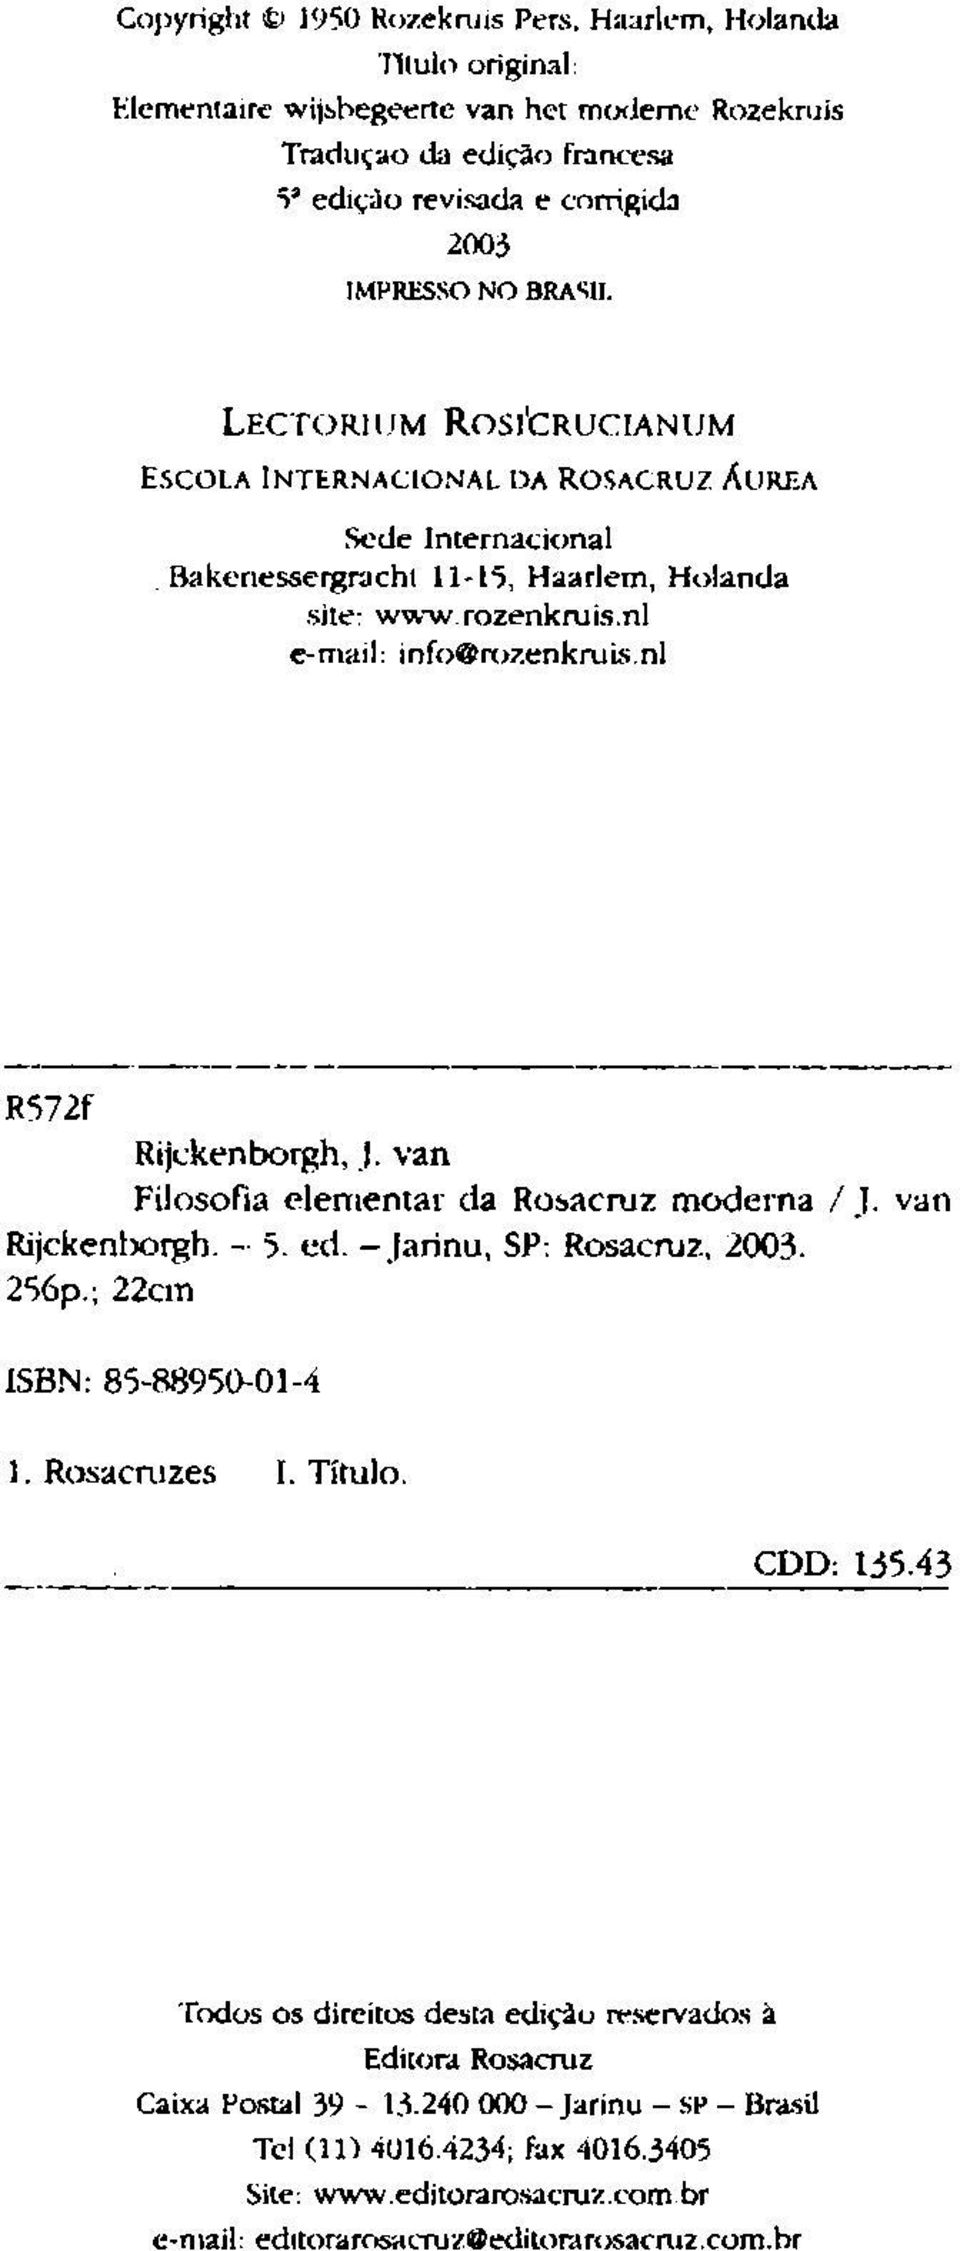 nl R572f Rijckenborgh, ). van Filosofia elementar da Robacruz modema I J. van Rijckenborgh. - 5. cd. - Jarinu, SP, R053cruZ, l003. 2S6p.; 22cm ISBN' 8S-R8950-0I-4 I. Rosacruzes I. Título. roo, 1.15.